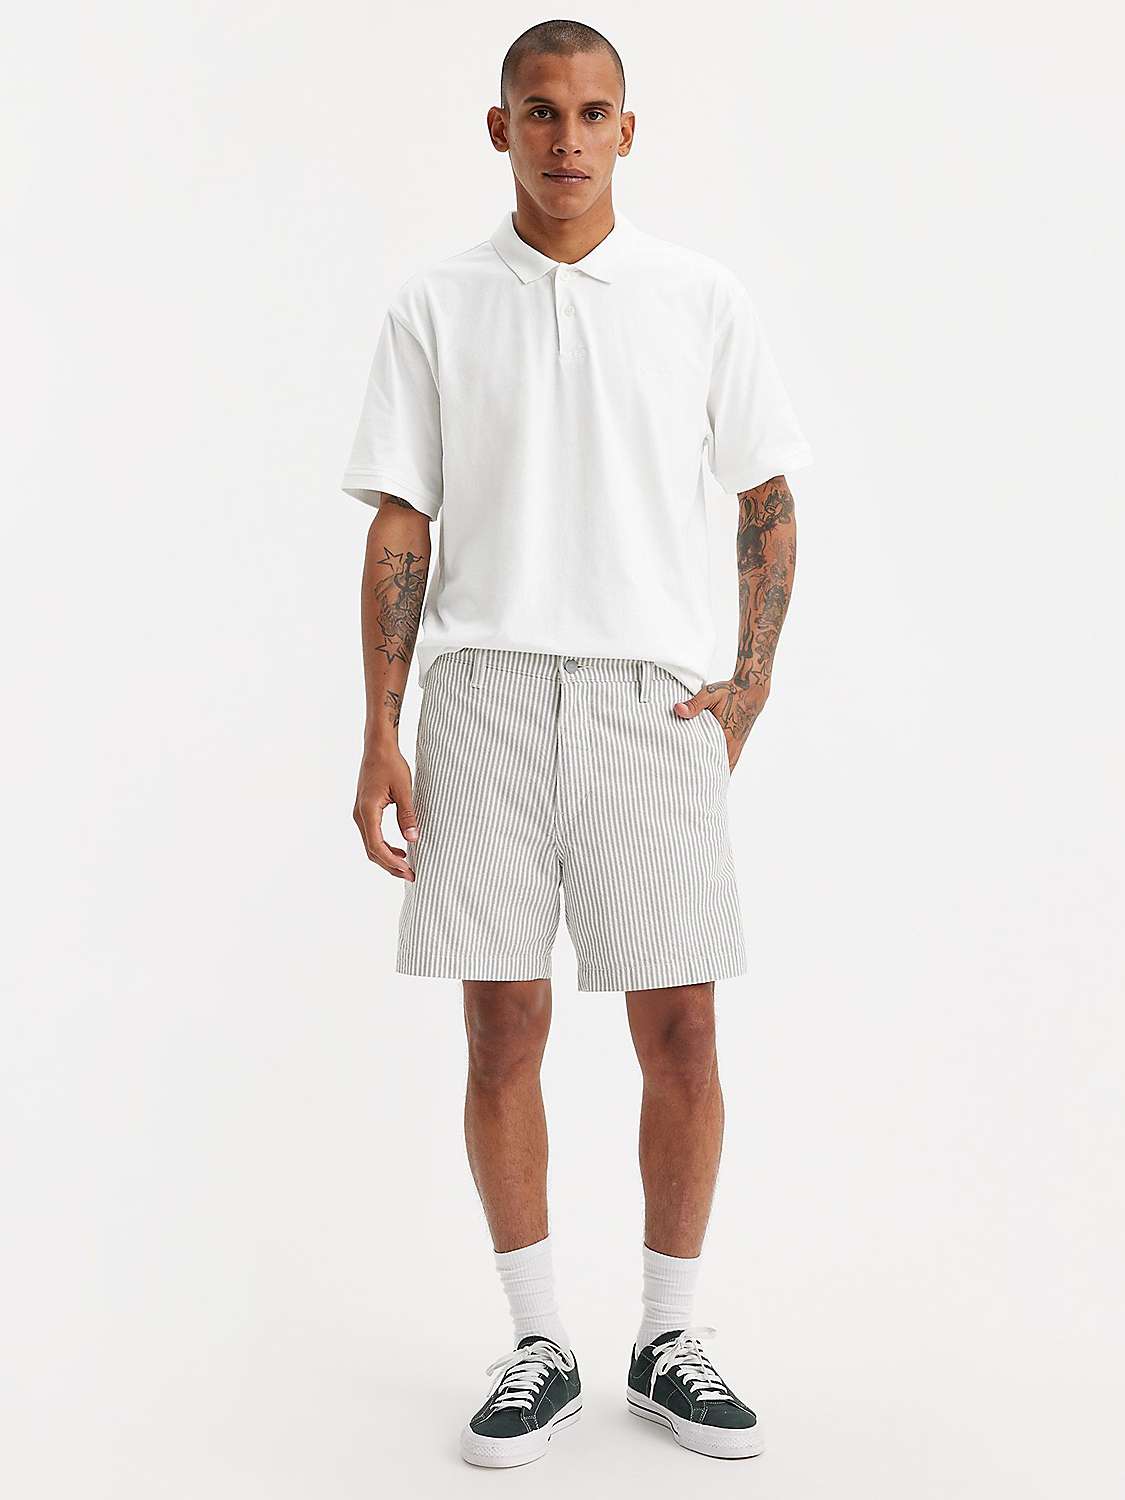 Buy Levi's XX Chino Authentic Marlon Stripe Shorts, Multi Online at johnlewis.com